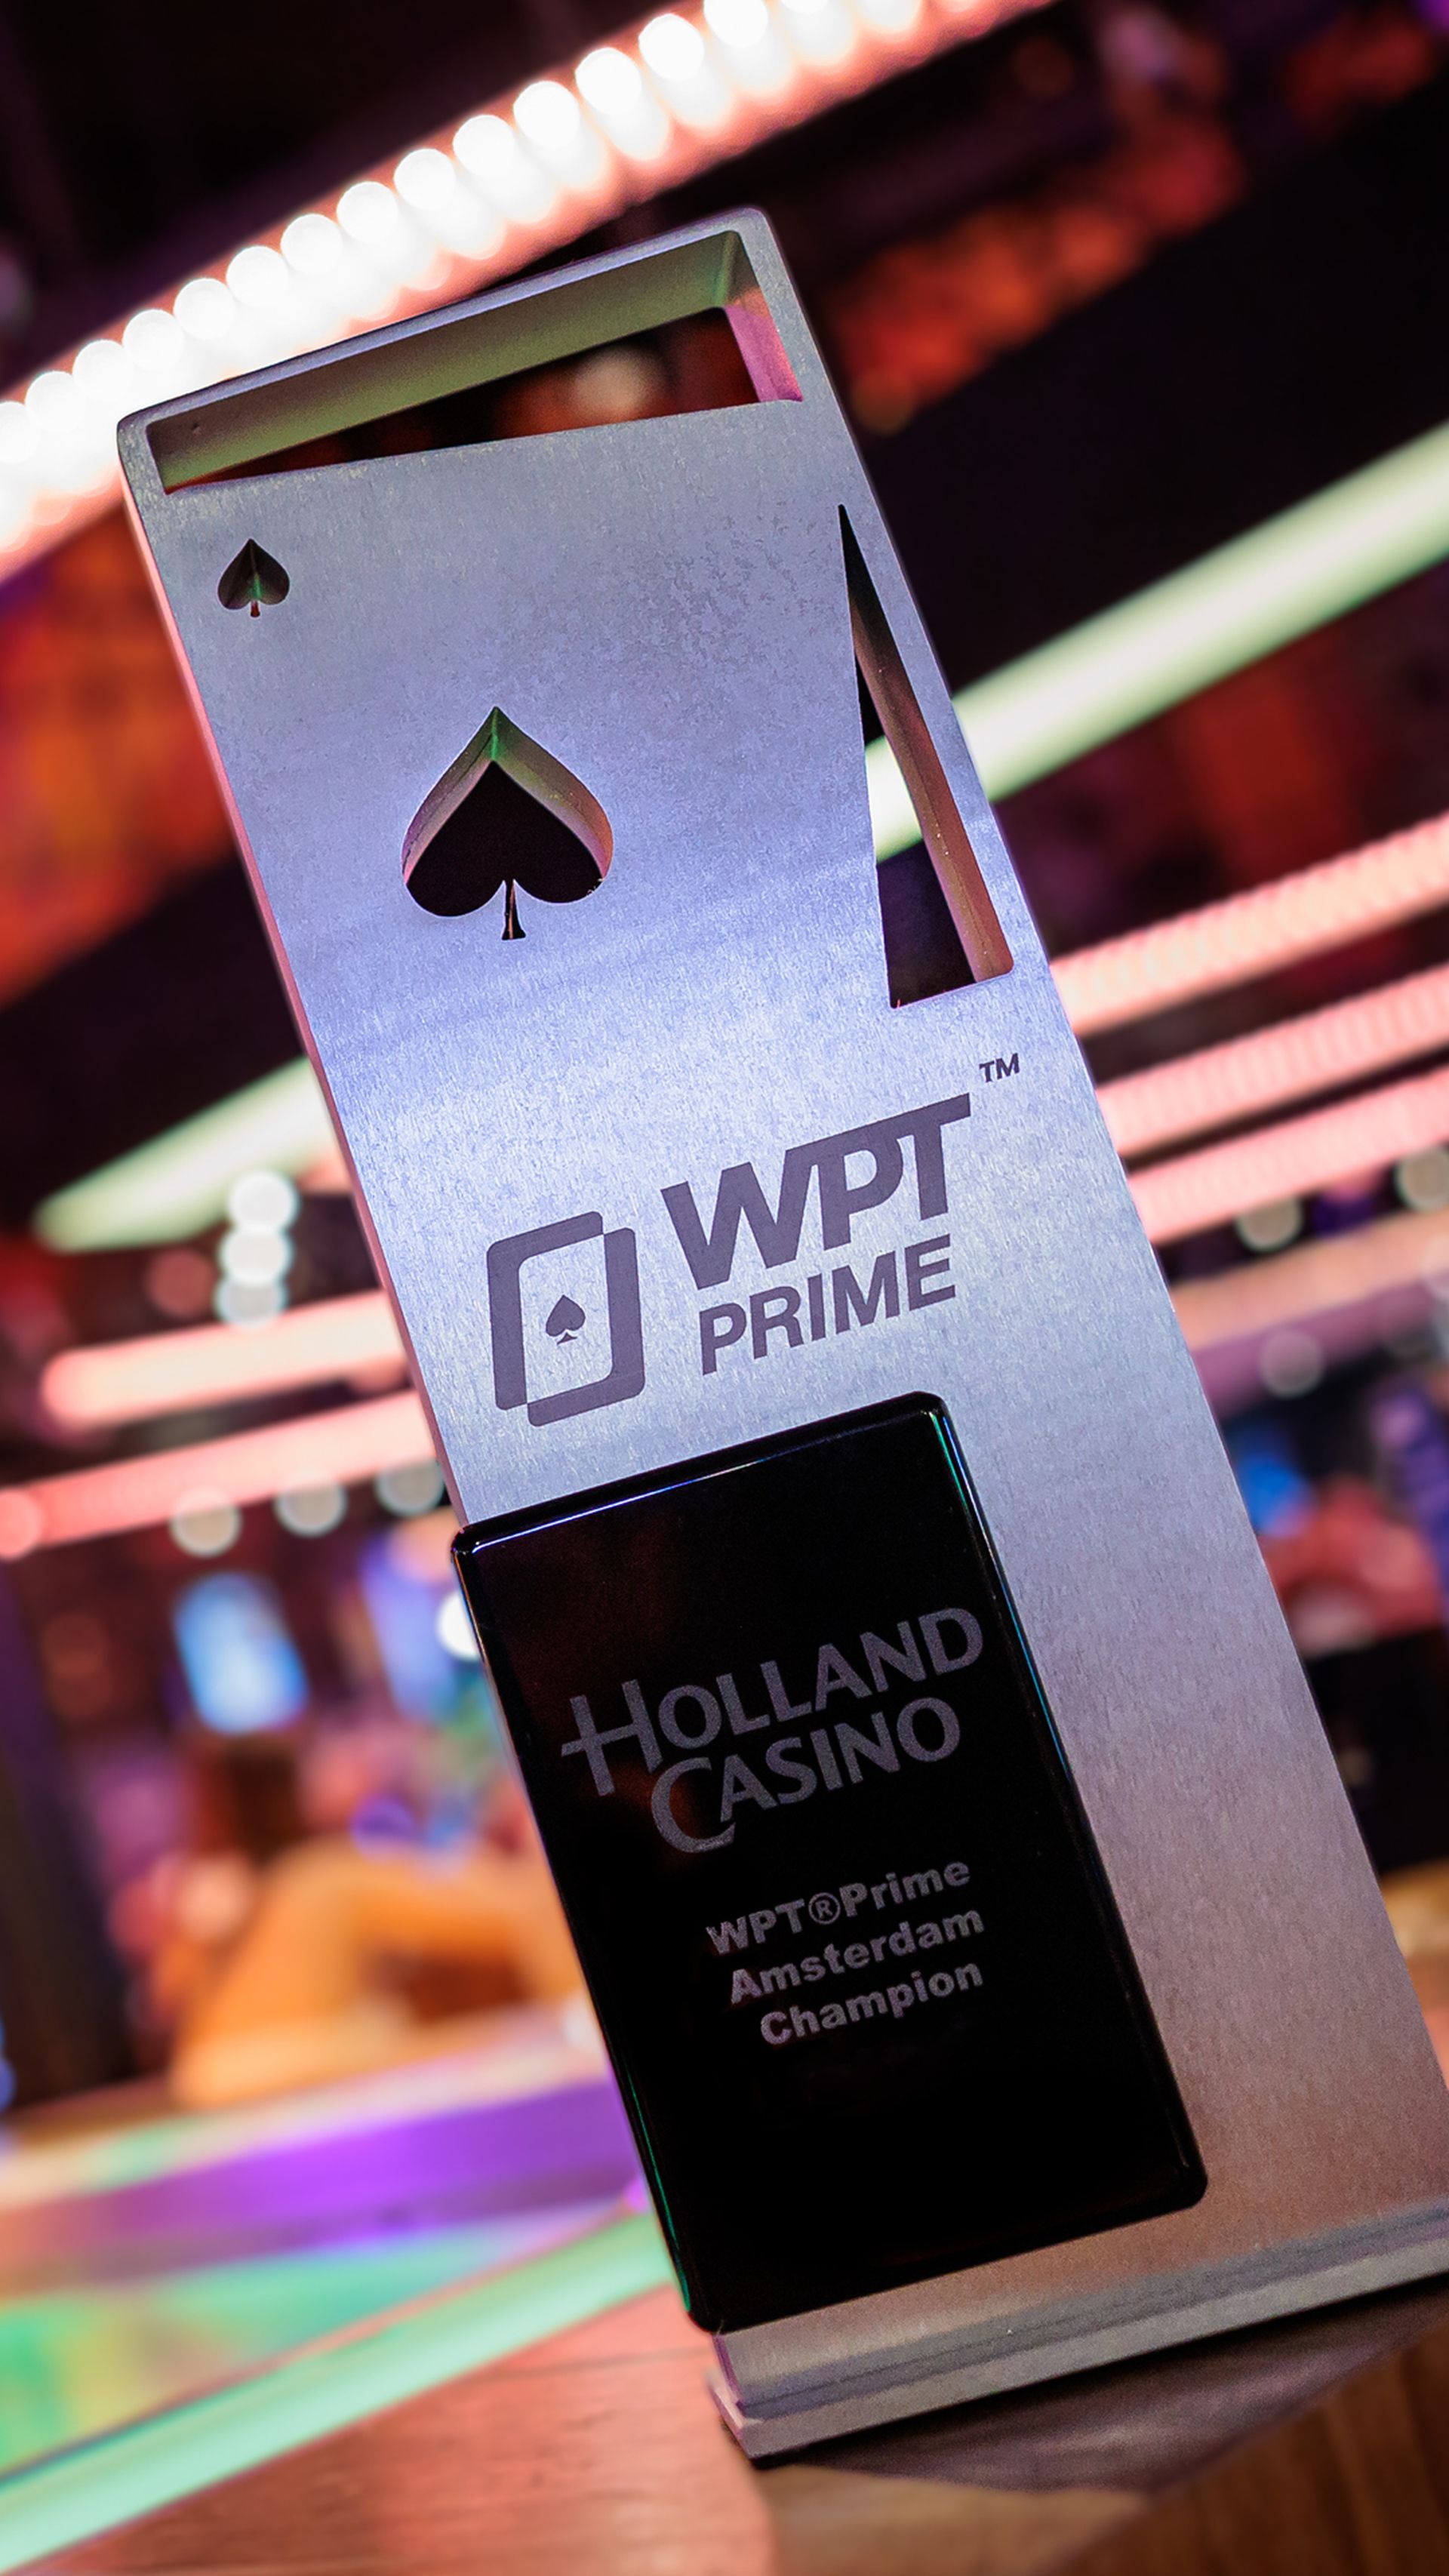 WPT PRIME Amsterdam award